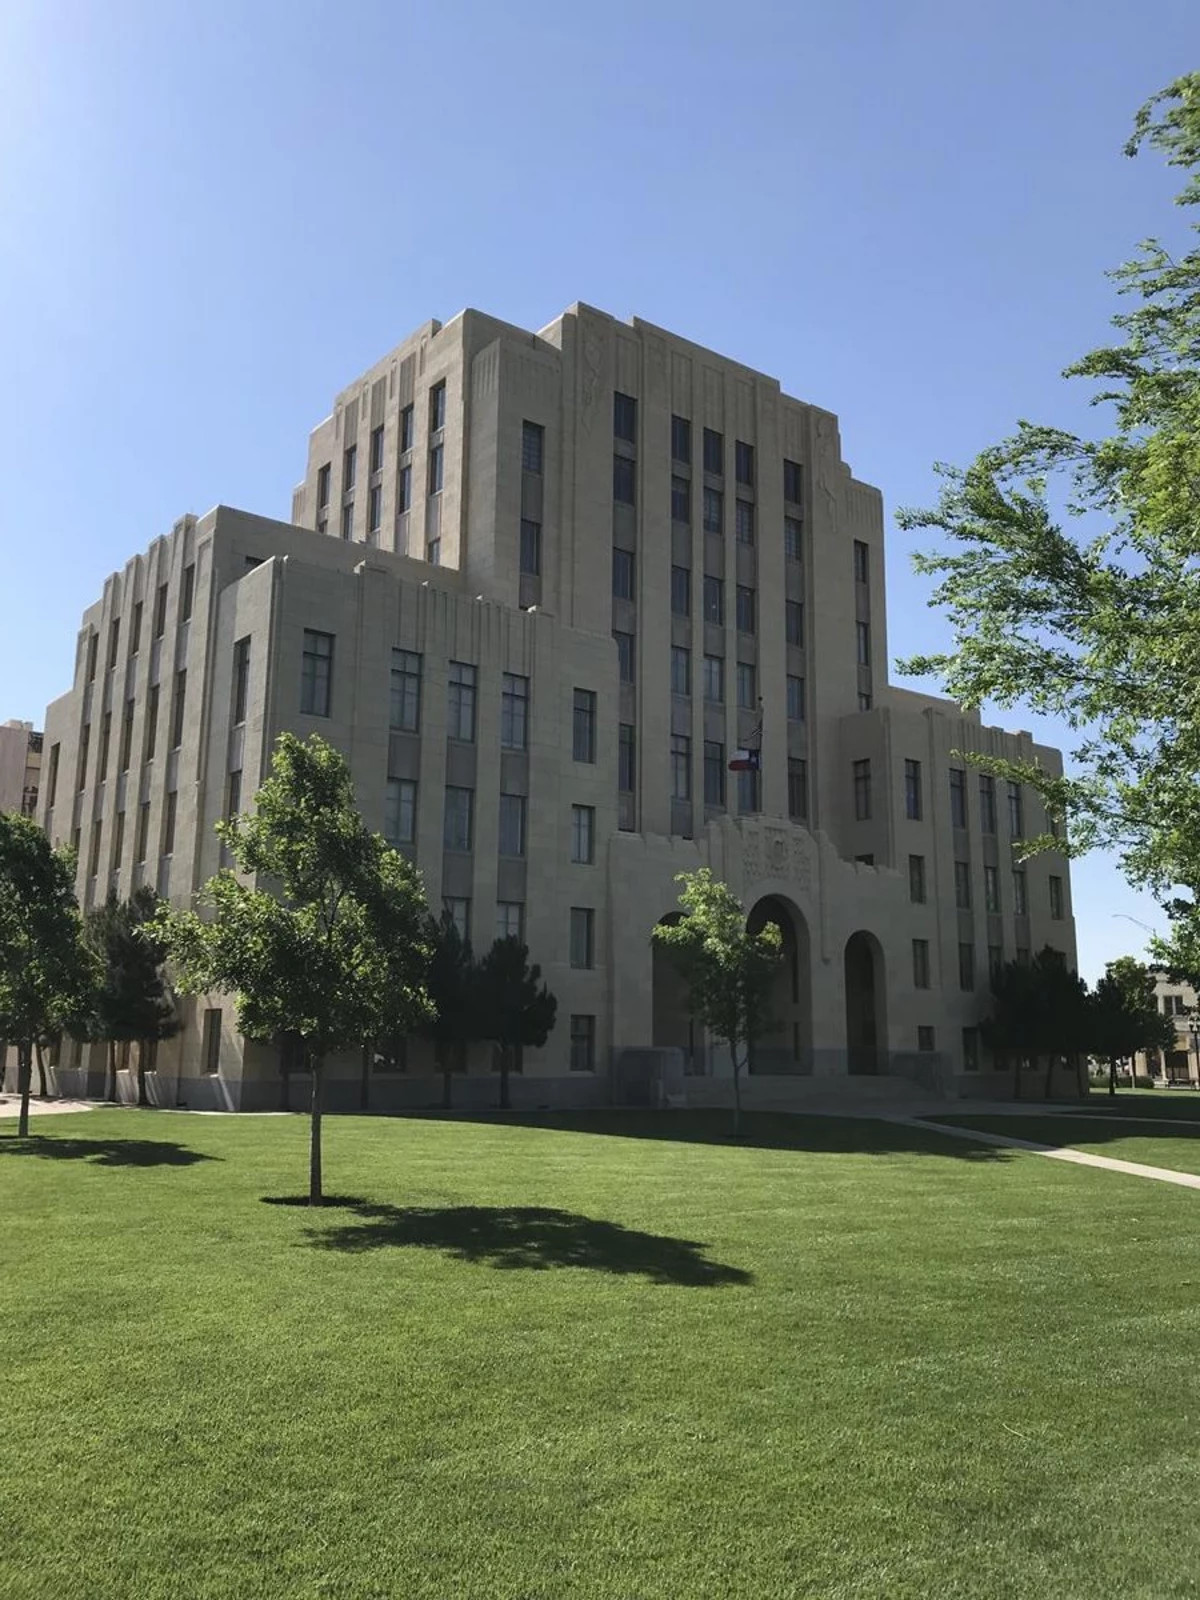 Potter County Judge Extends City Buildings Closures